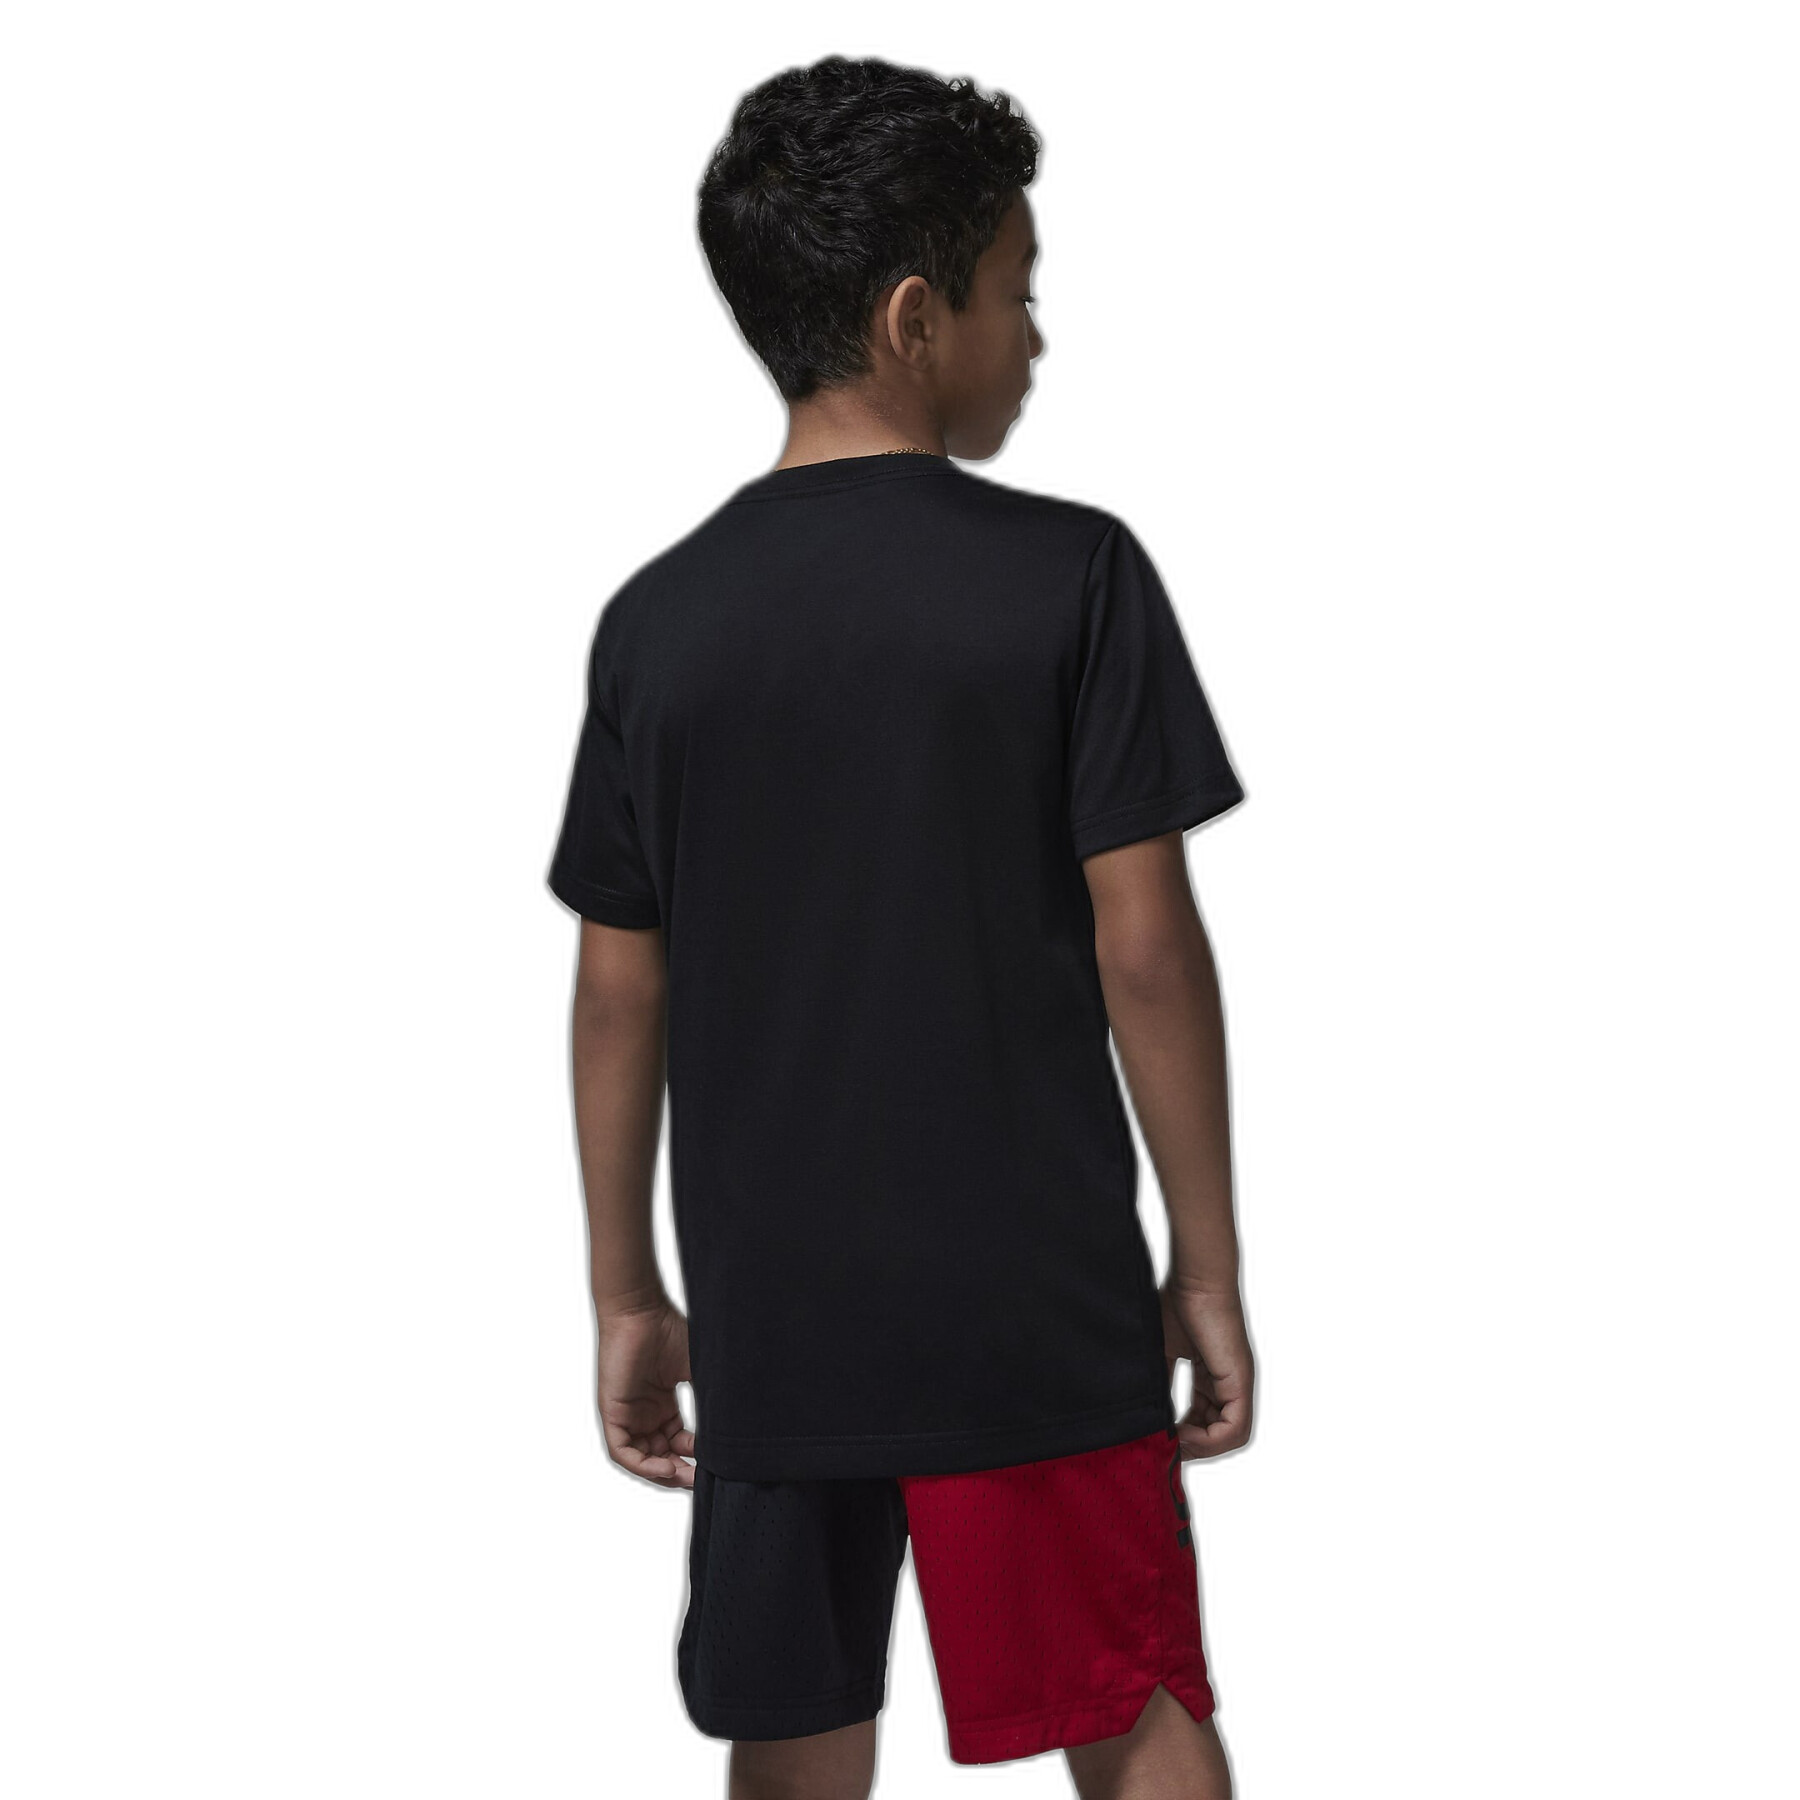 T-shirt de criança Jordan Jumpman Sustainable Graphic